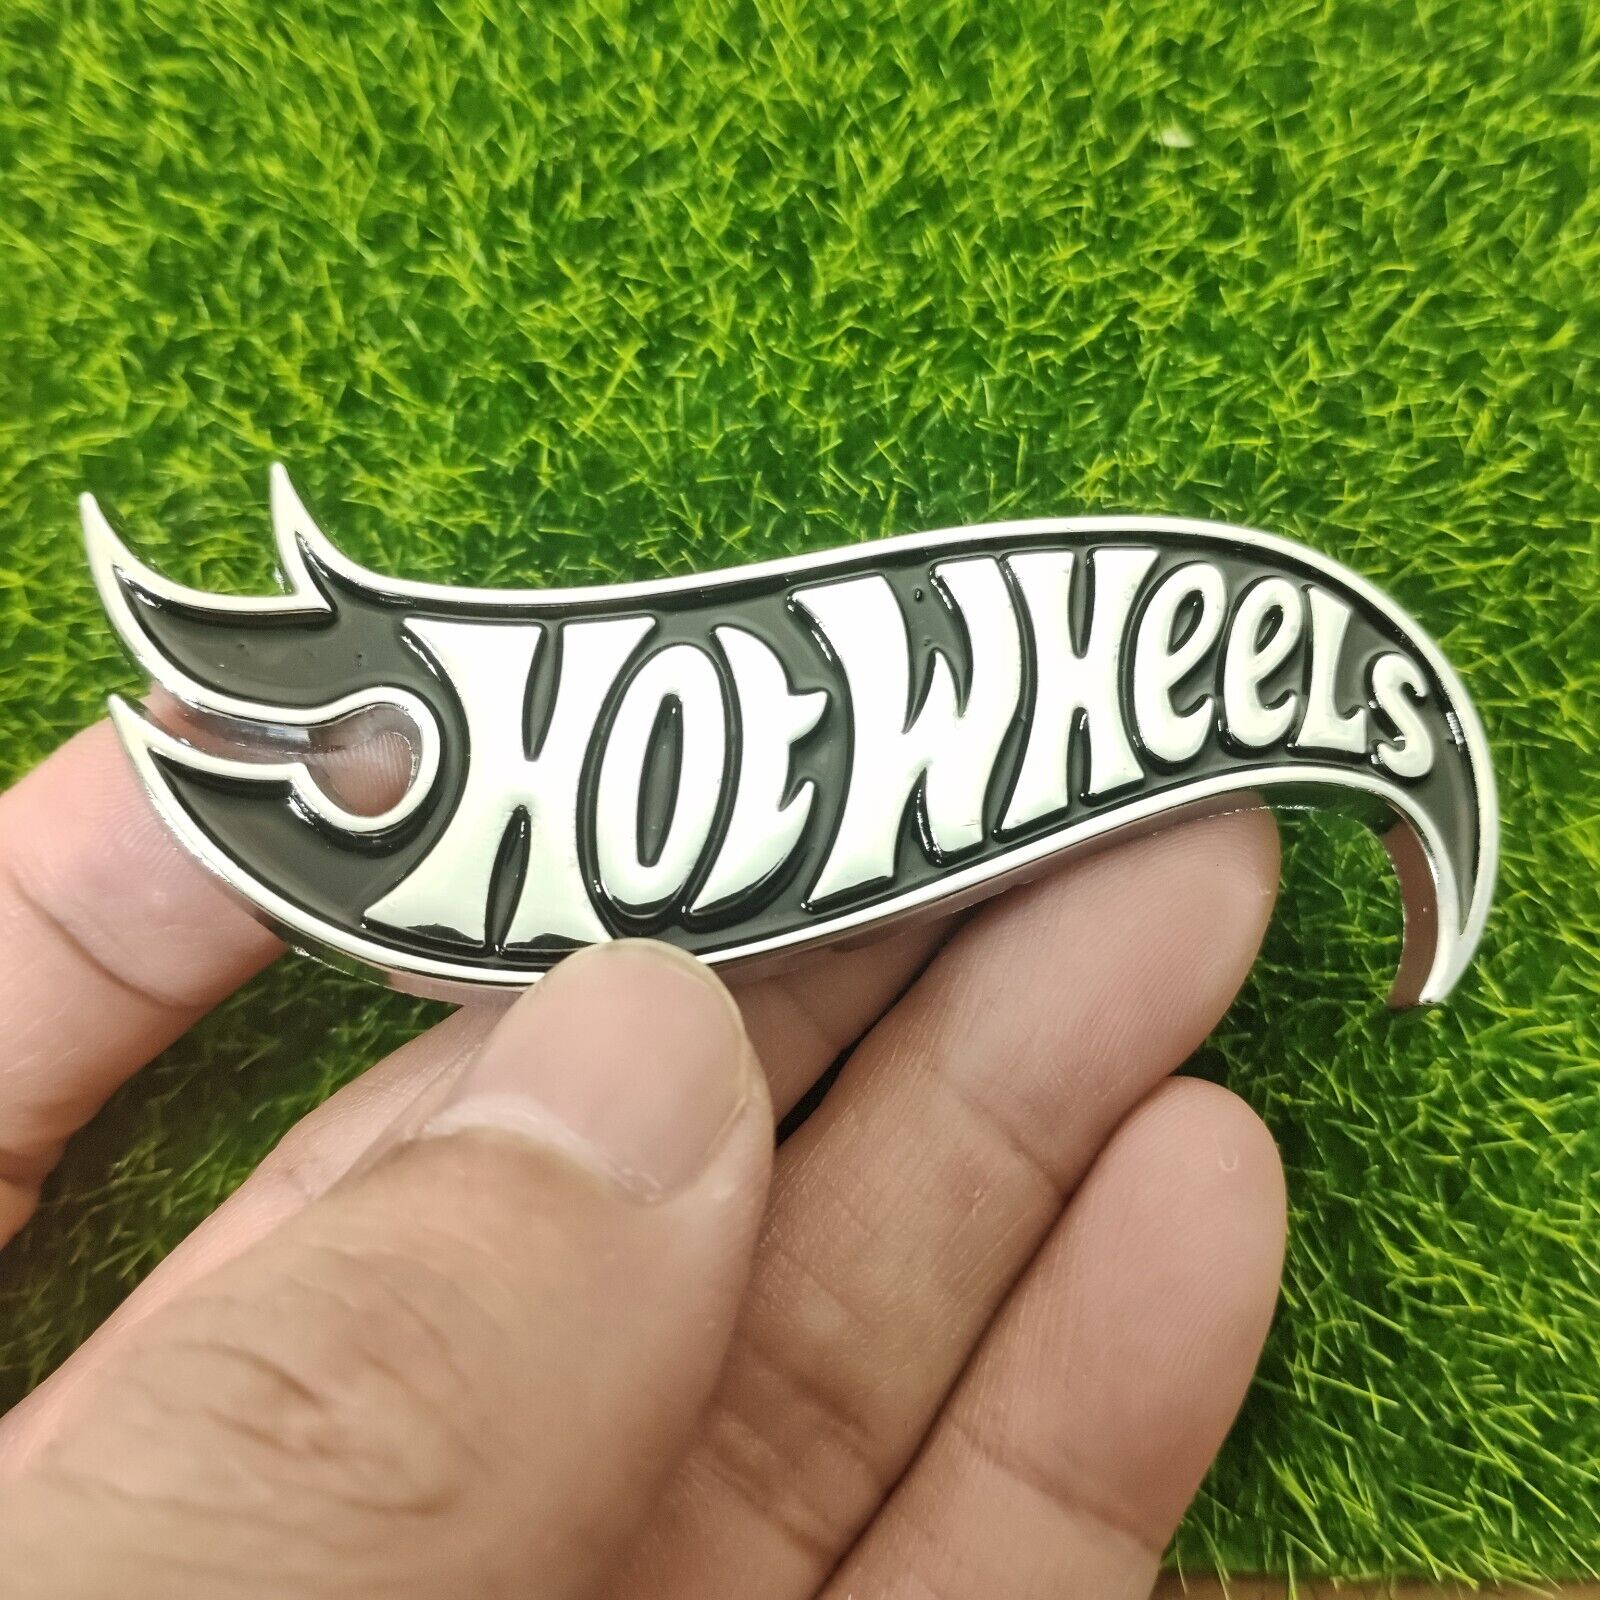 2PCS Hot Wheels Emblem Car Badge 3D Metal Fender Sticker 3D Raised Letters Decal